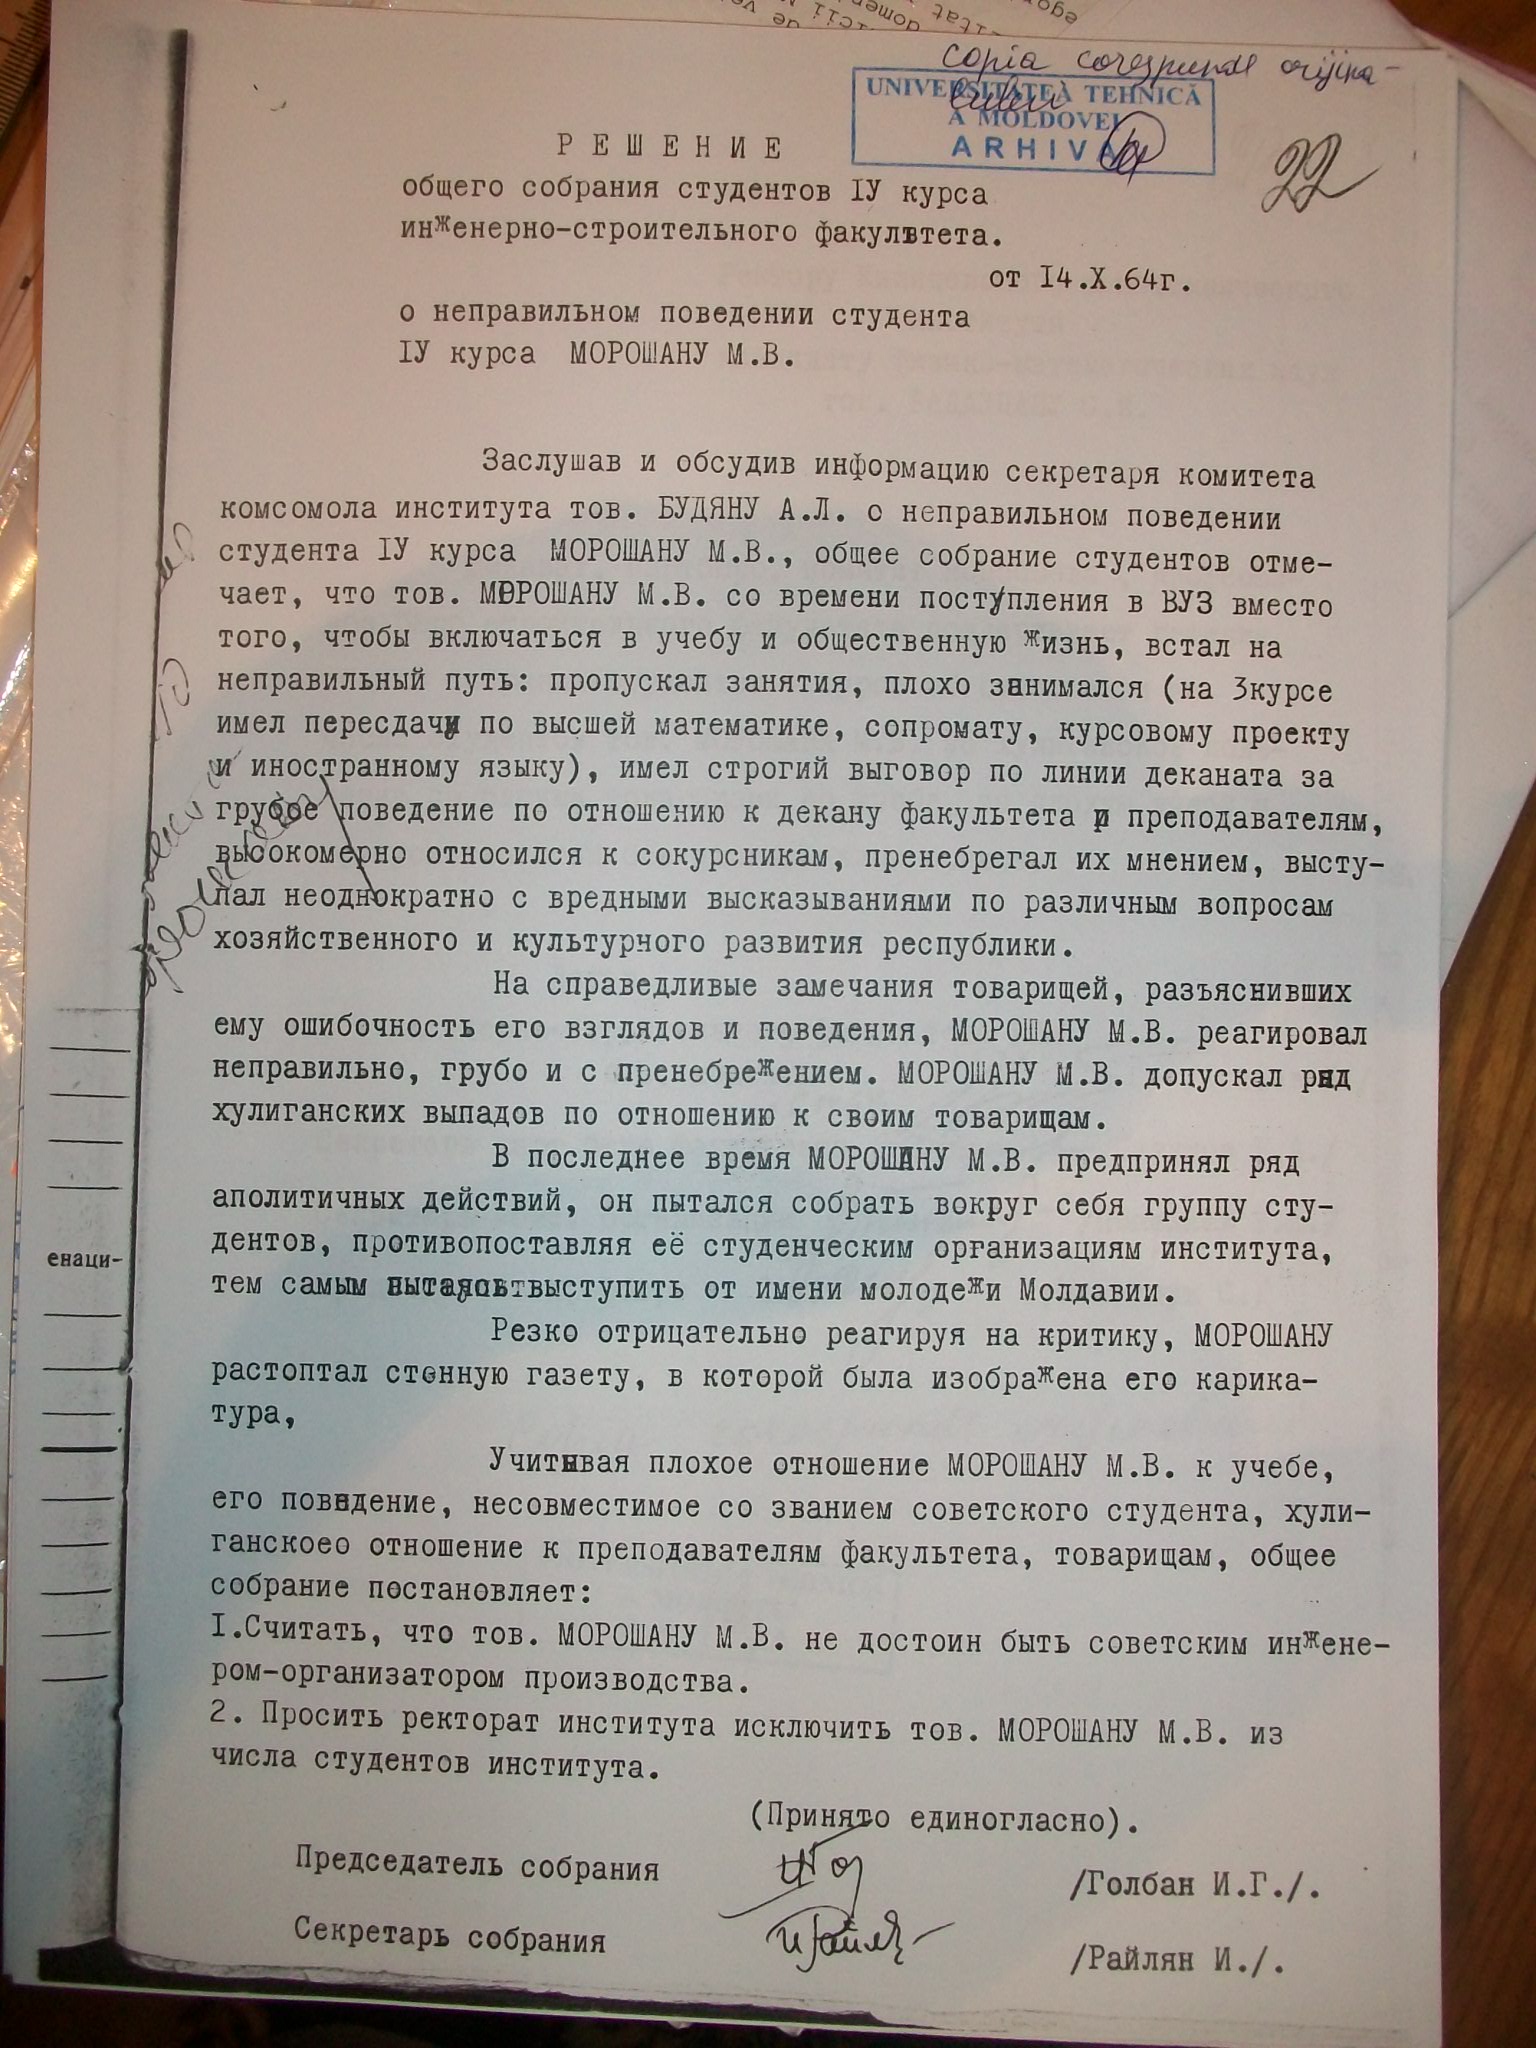 Source: Personal Archive of Mihai MoroșanuPhoto: Igor Cașu